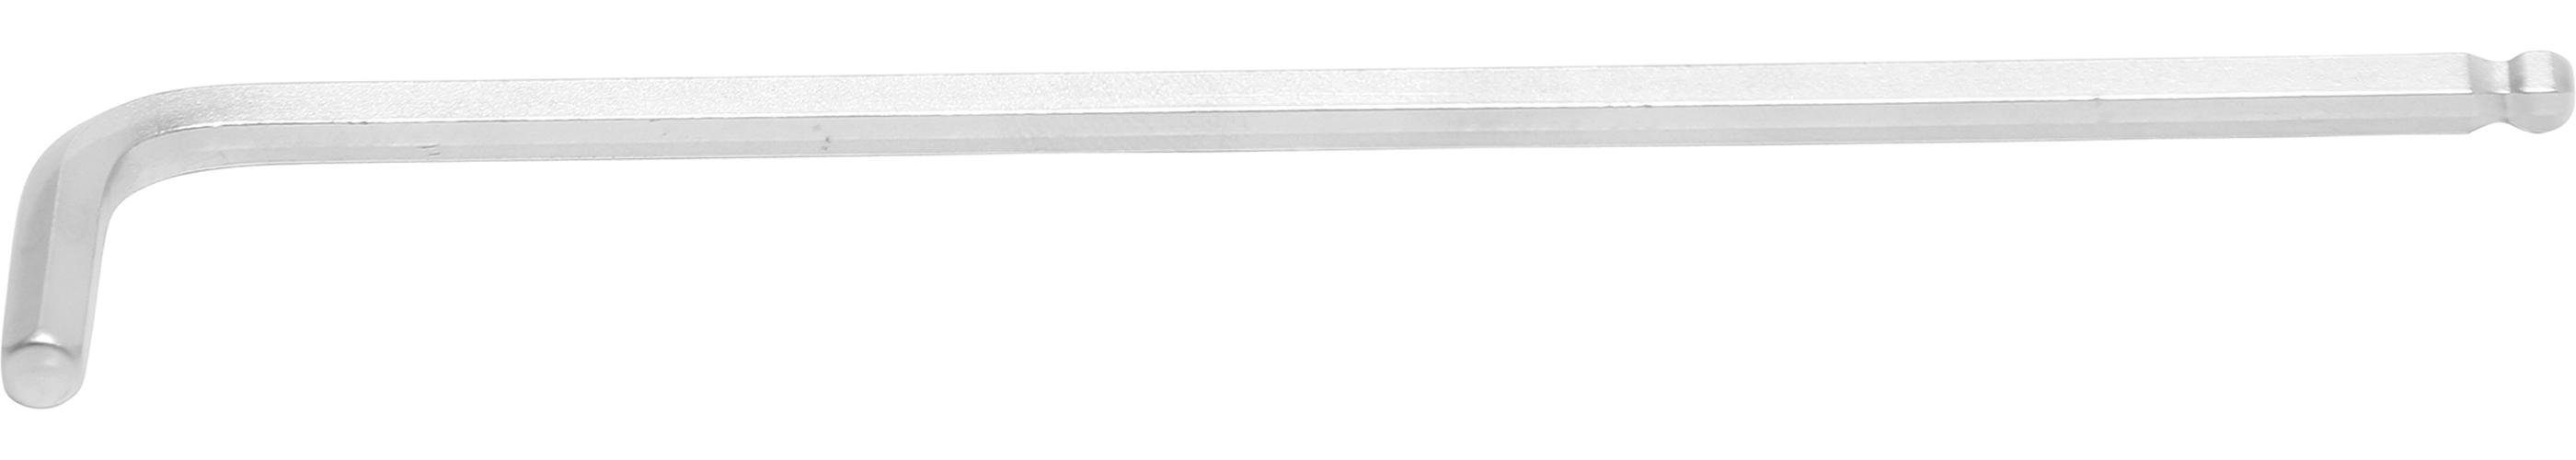 BGS technic Bit-Schraubendreher Winkelschlüssel, extra lang, Innensechskant / Innensechskant mit Kugelkopf 6 mm